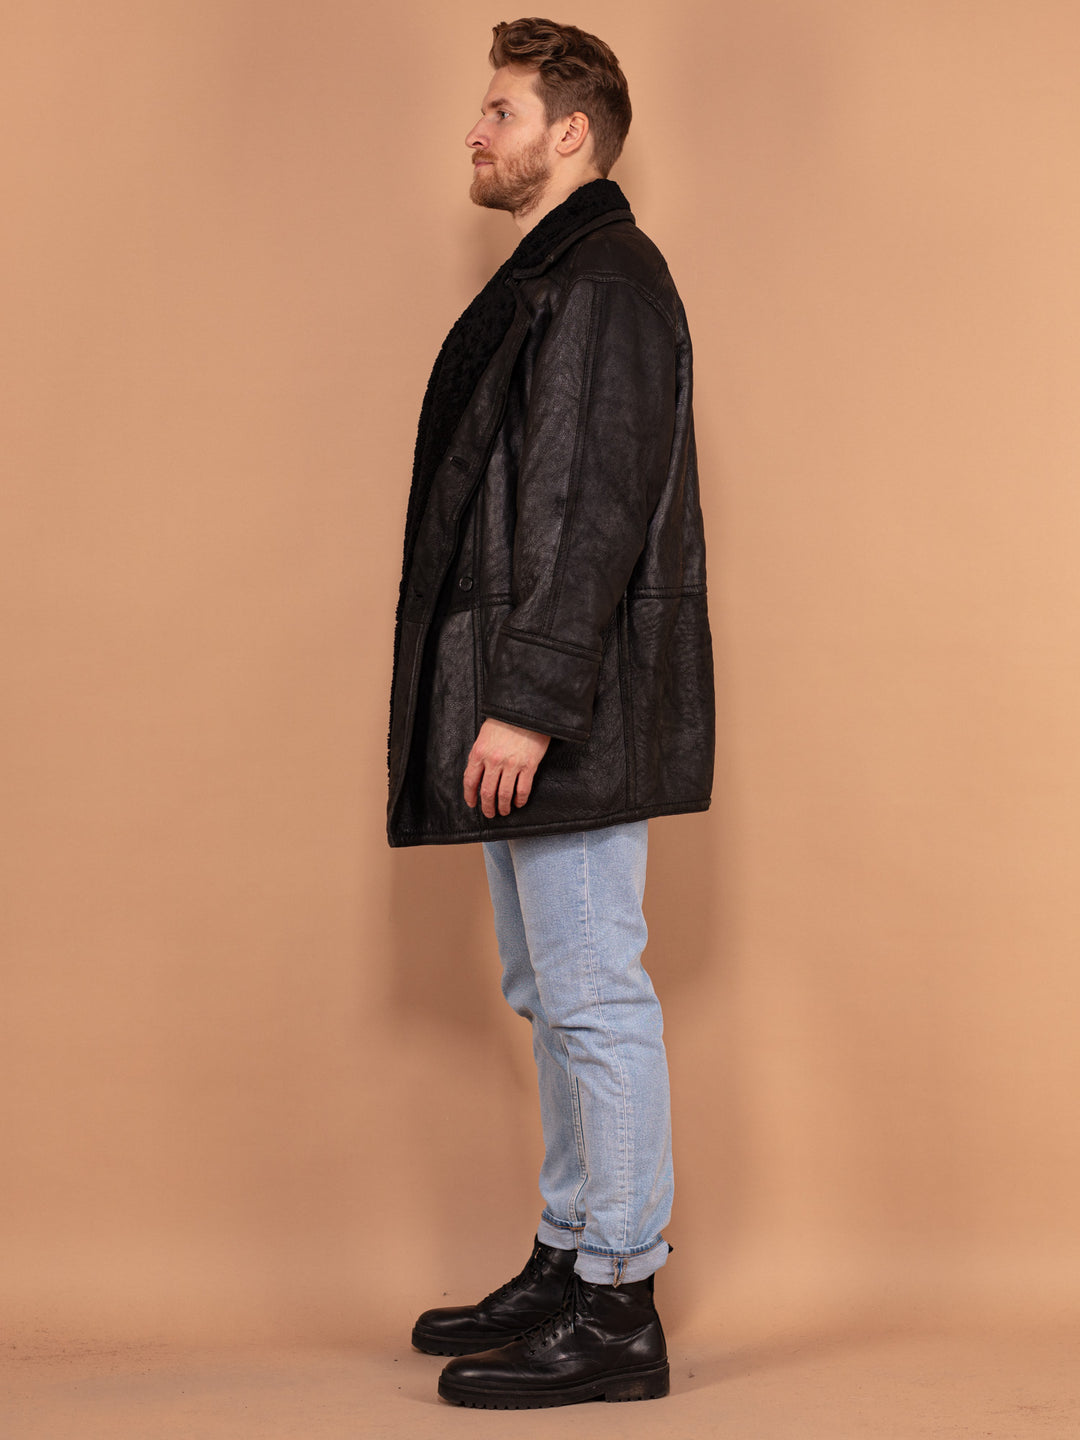 Black Sheepskin Leather Coat 90's, Size L Large, Vintage Men Shearling Coat, Classic 90s Outerwear, Sheep Fur Winter Coat, Leatherwear